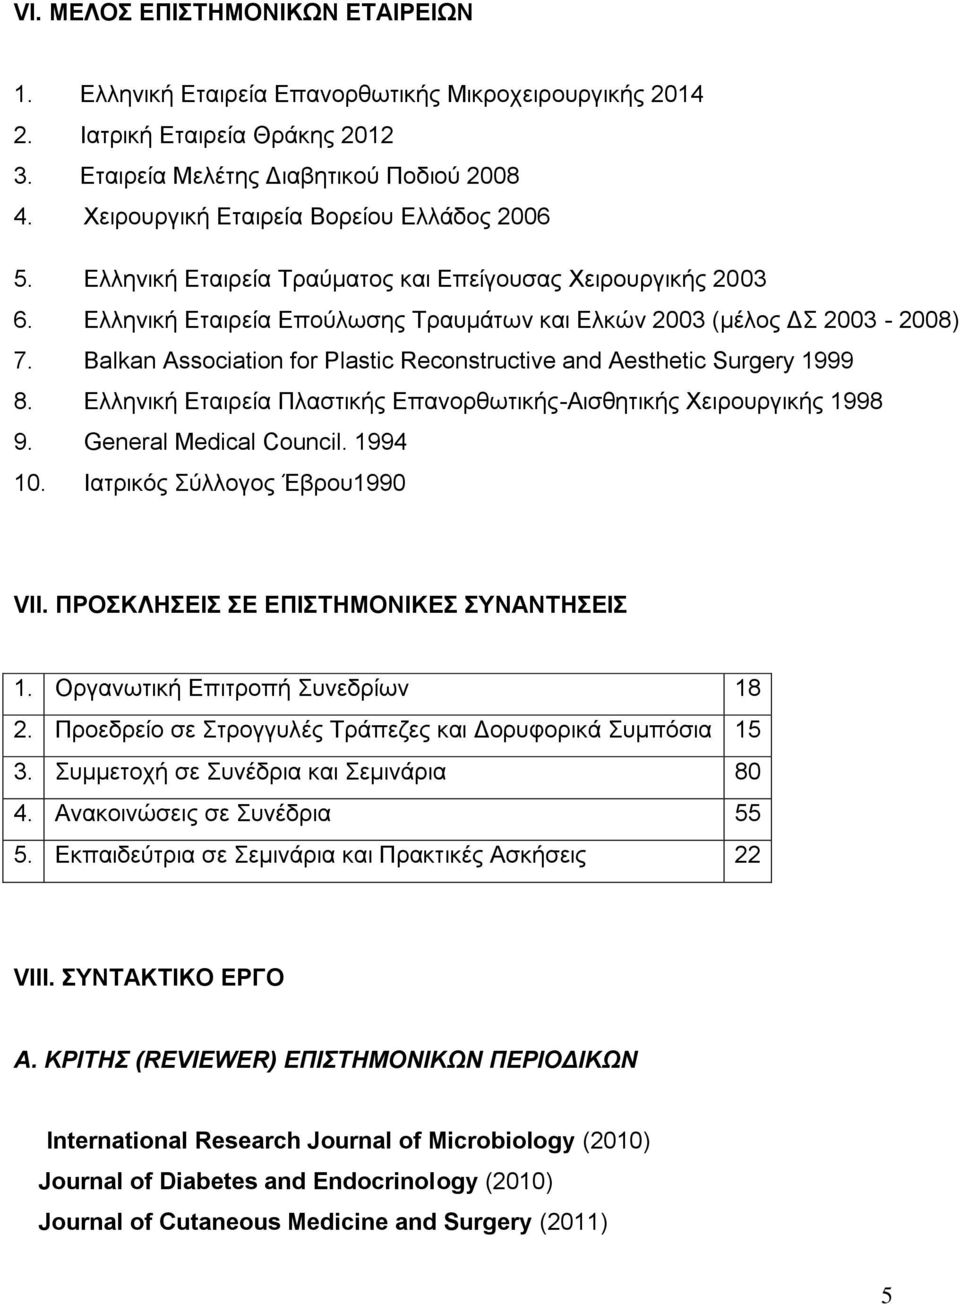 Balkan Association for Plastic Reconstructive and Aesthetic Surgery 1999 8. Ελληνική Εταιρεία Πλαστικής Επανορθωτικής-Αισθητικής Χειρουργικής 1998 9. General Medical Council. 1994 10.